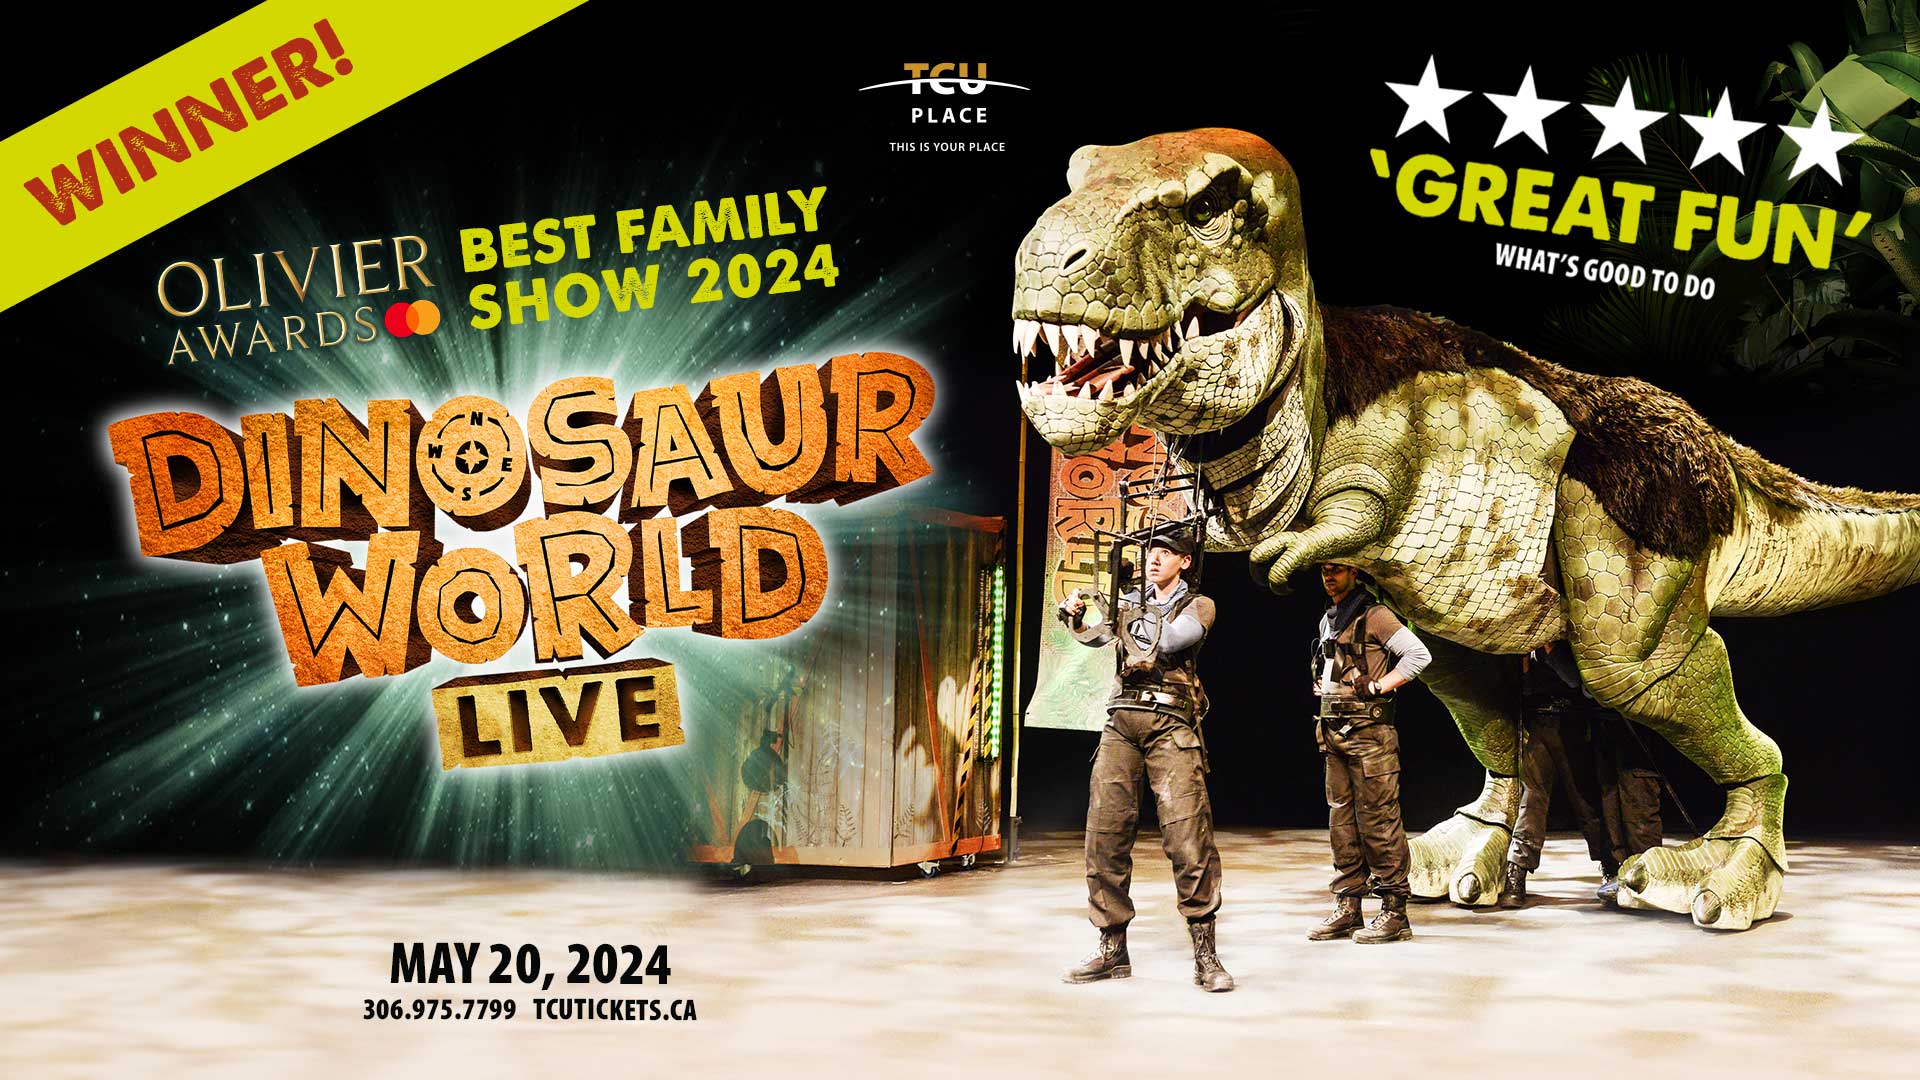 Dinosaur World Live - May 20